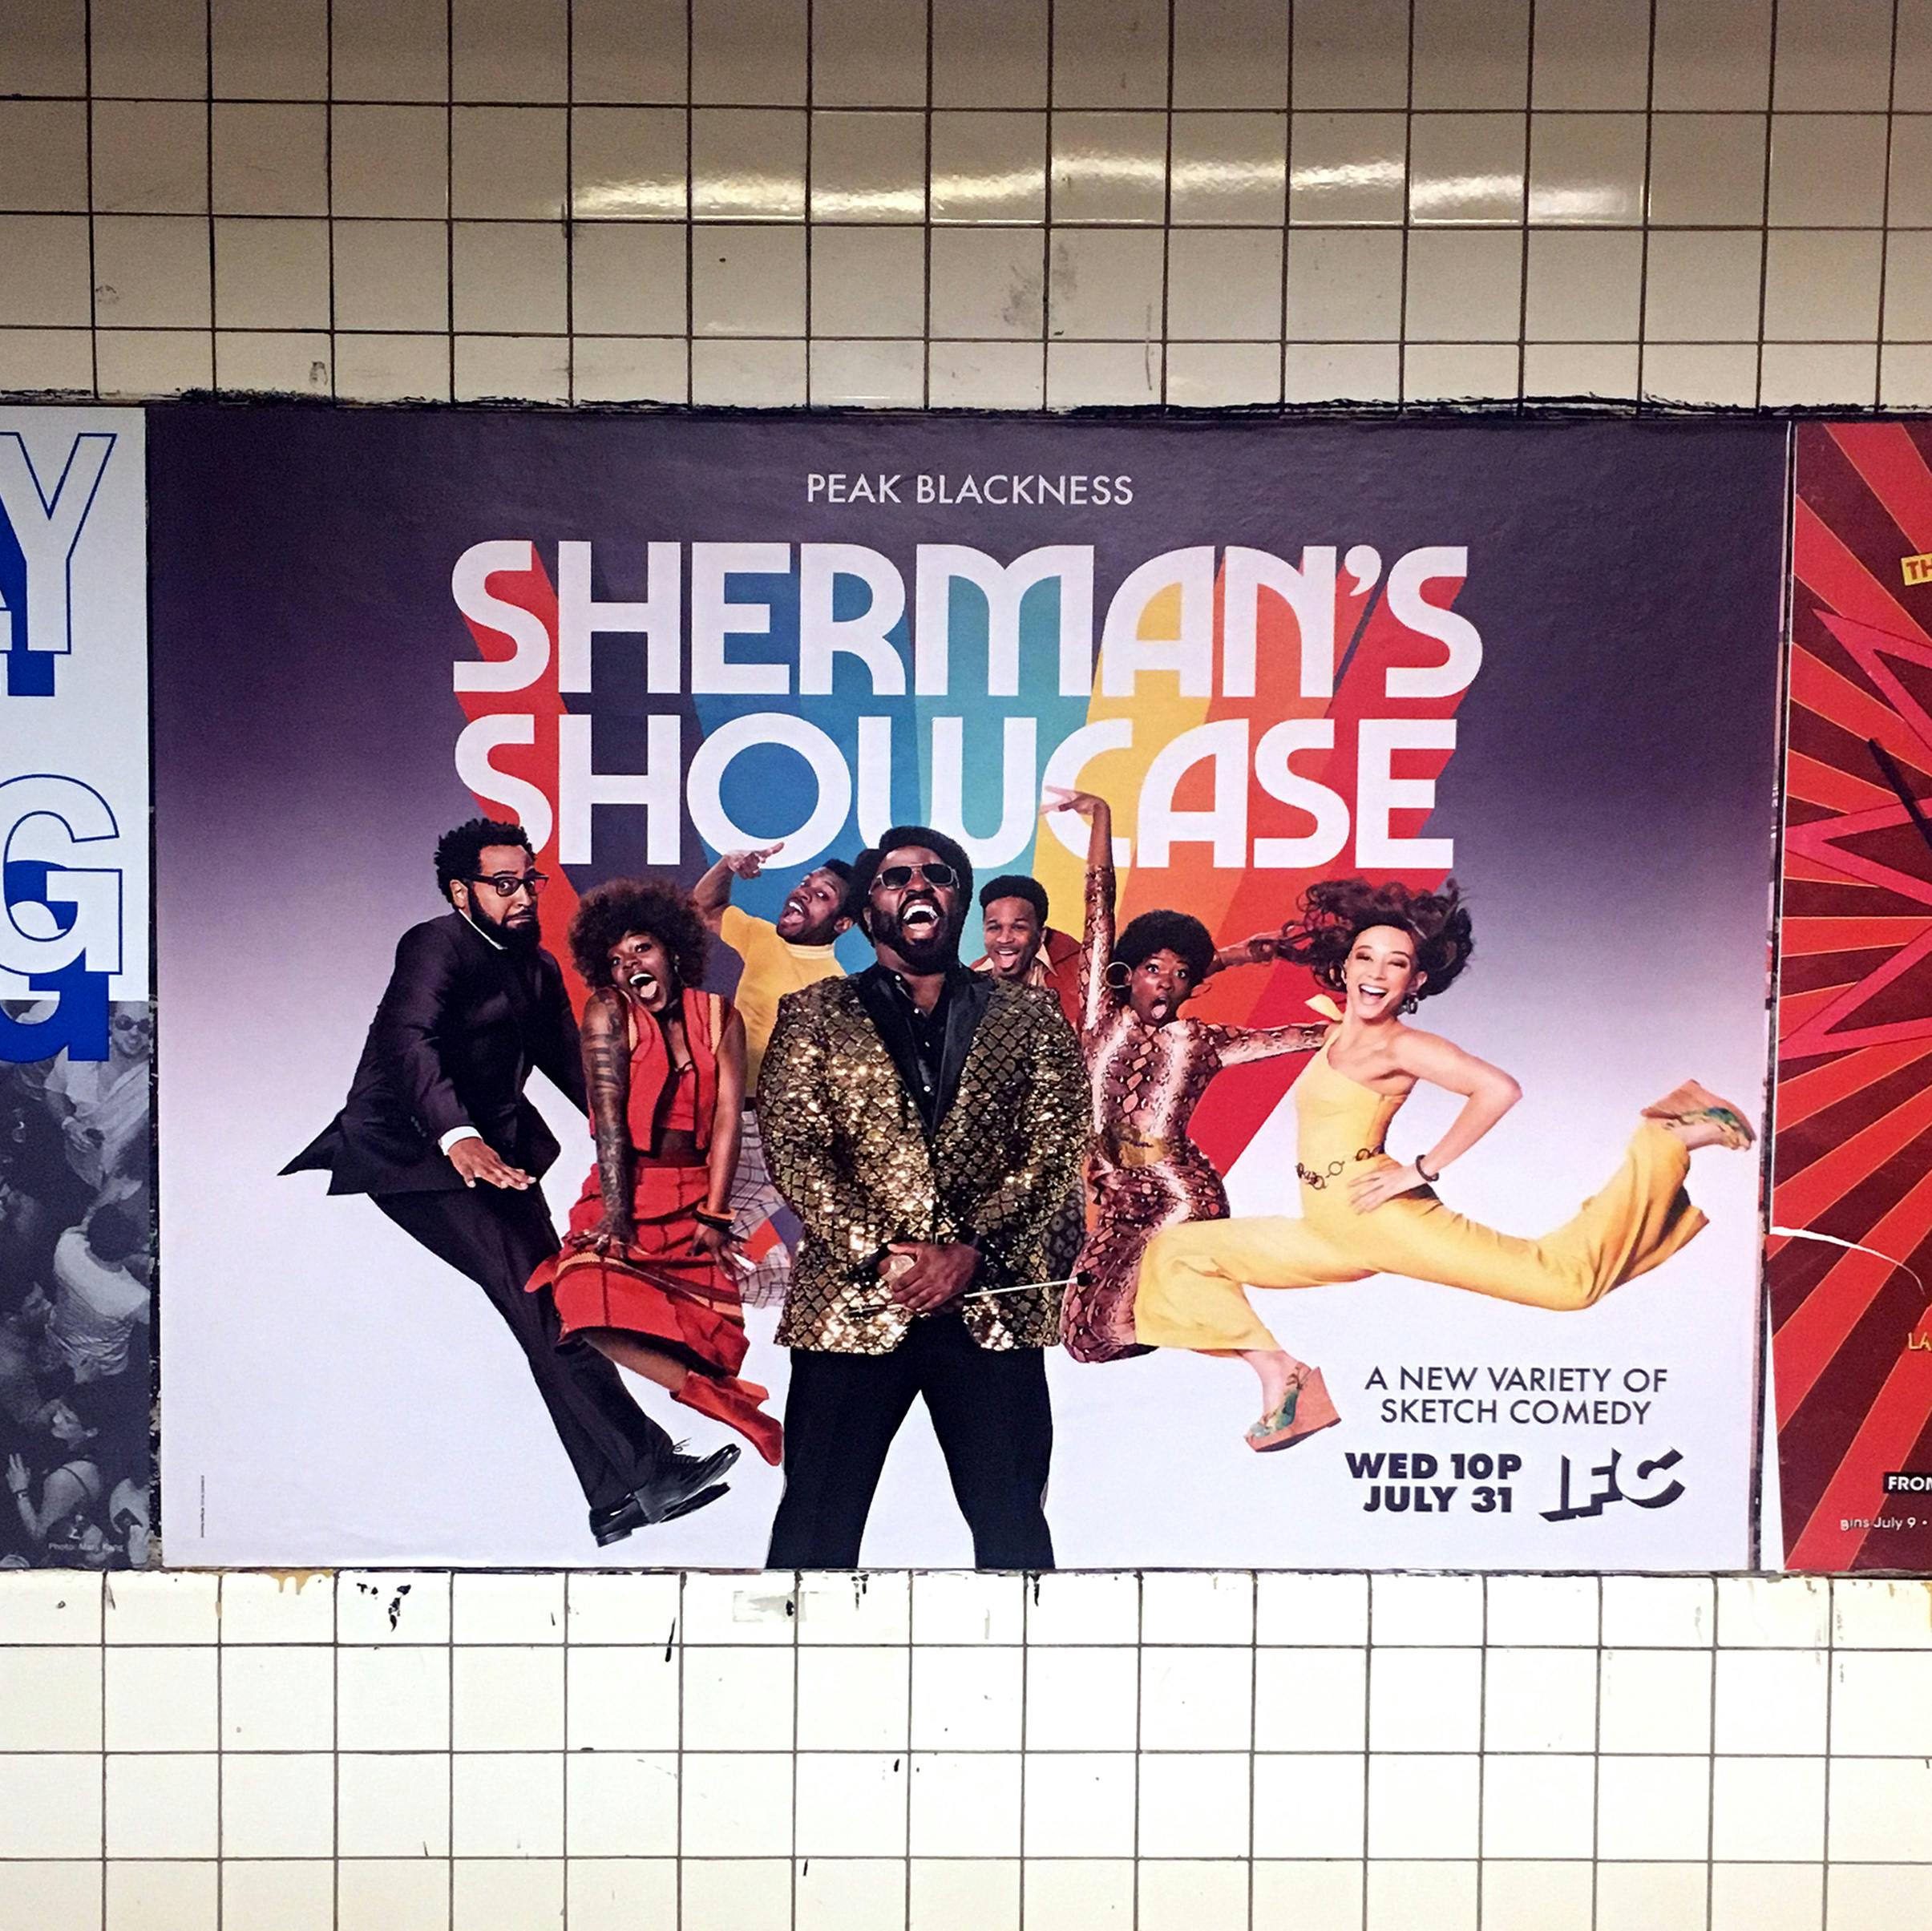 Sherman's Showcase Subway Ad